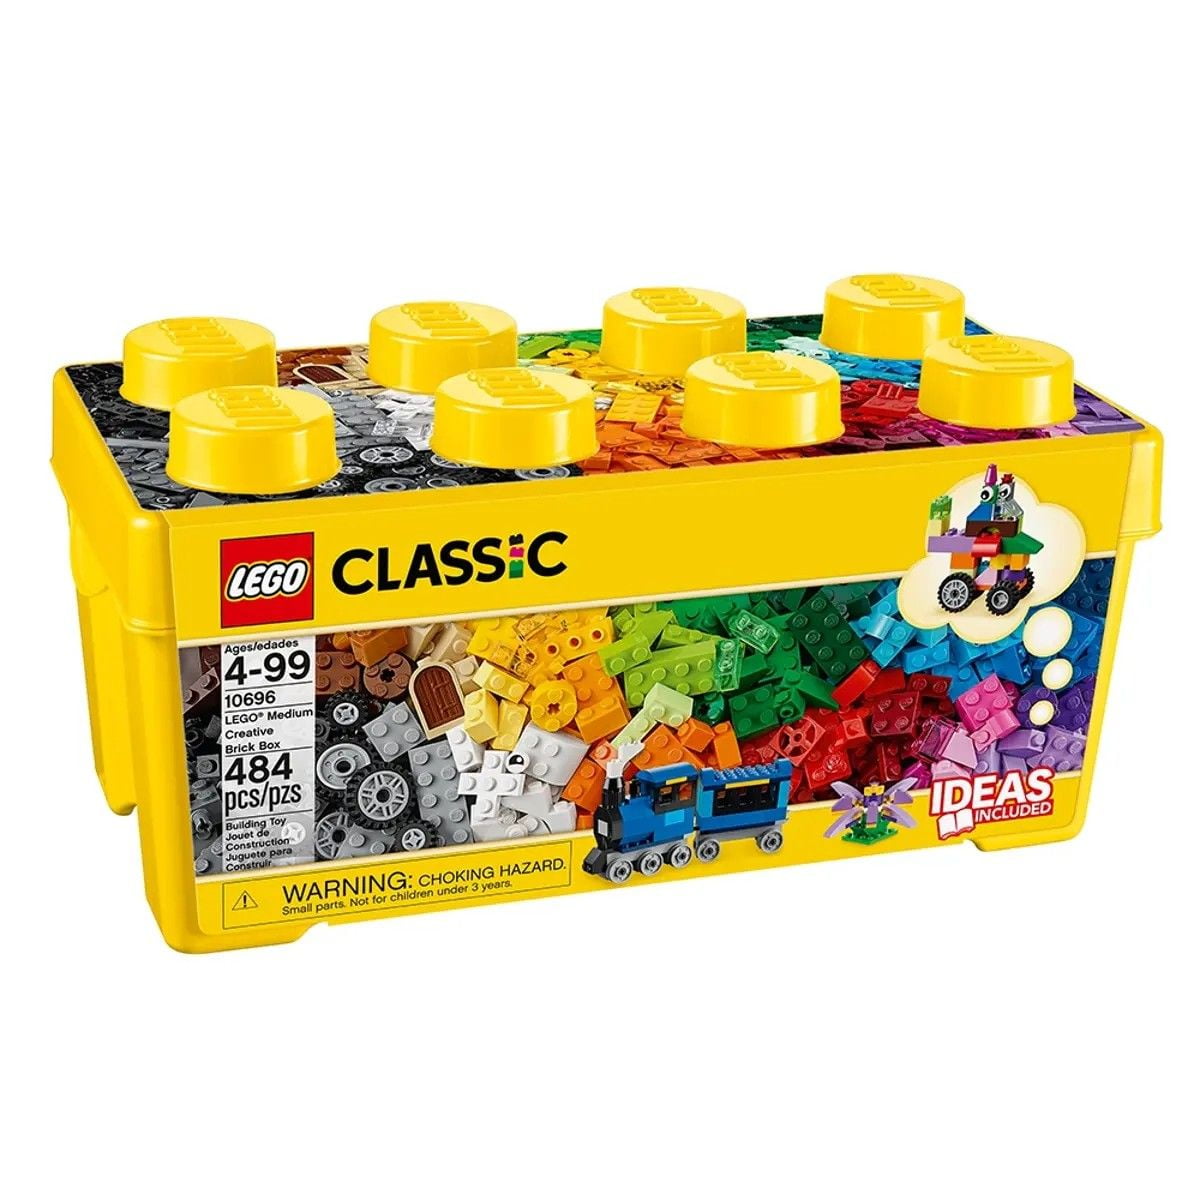 LEGO Medium Creative Brick Box LEGO Classic 10696